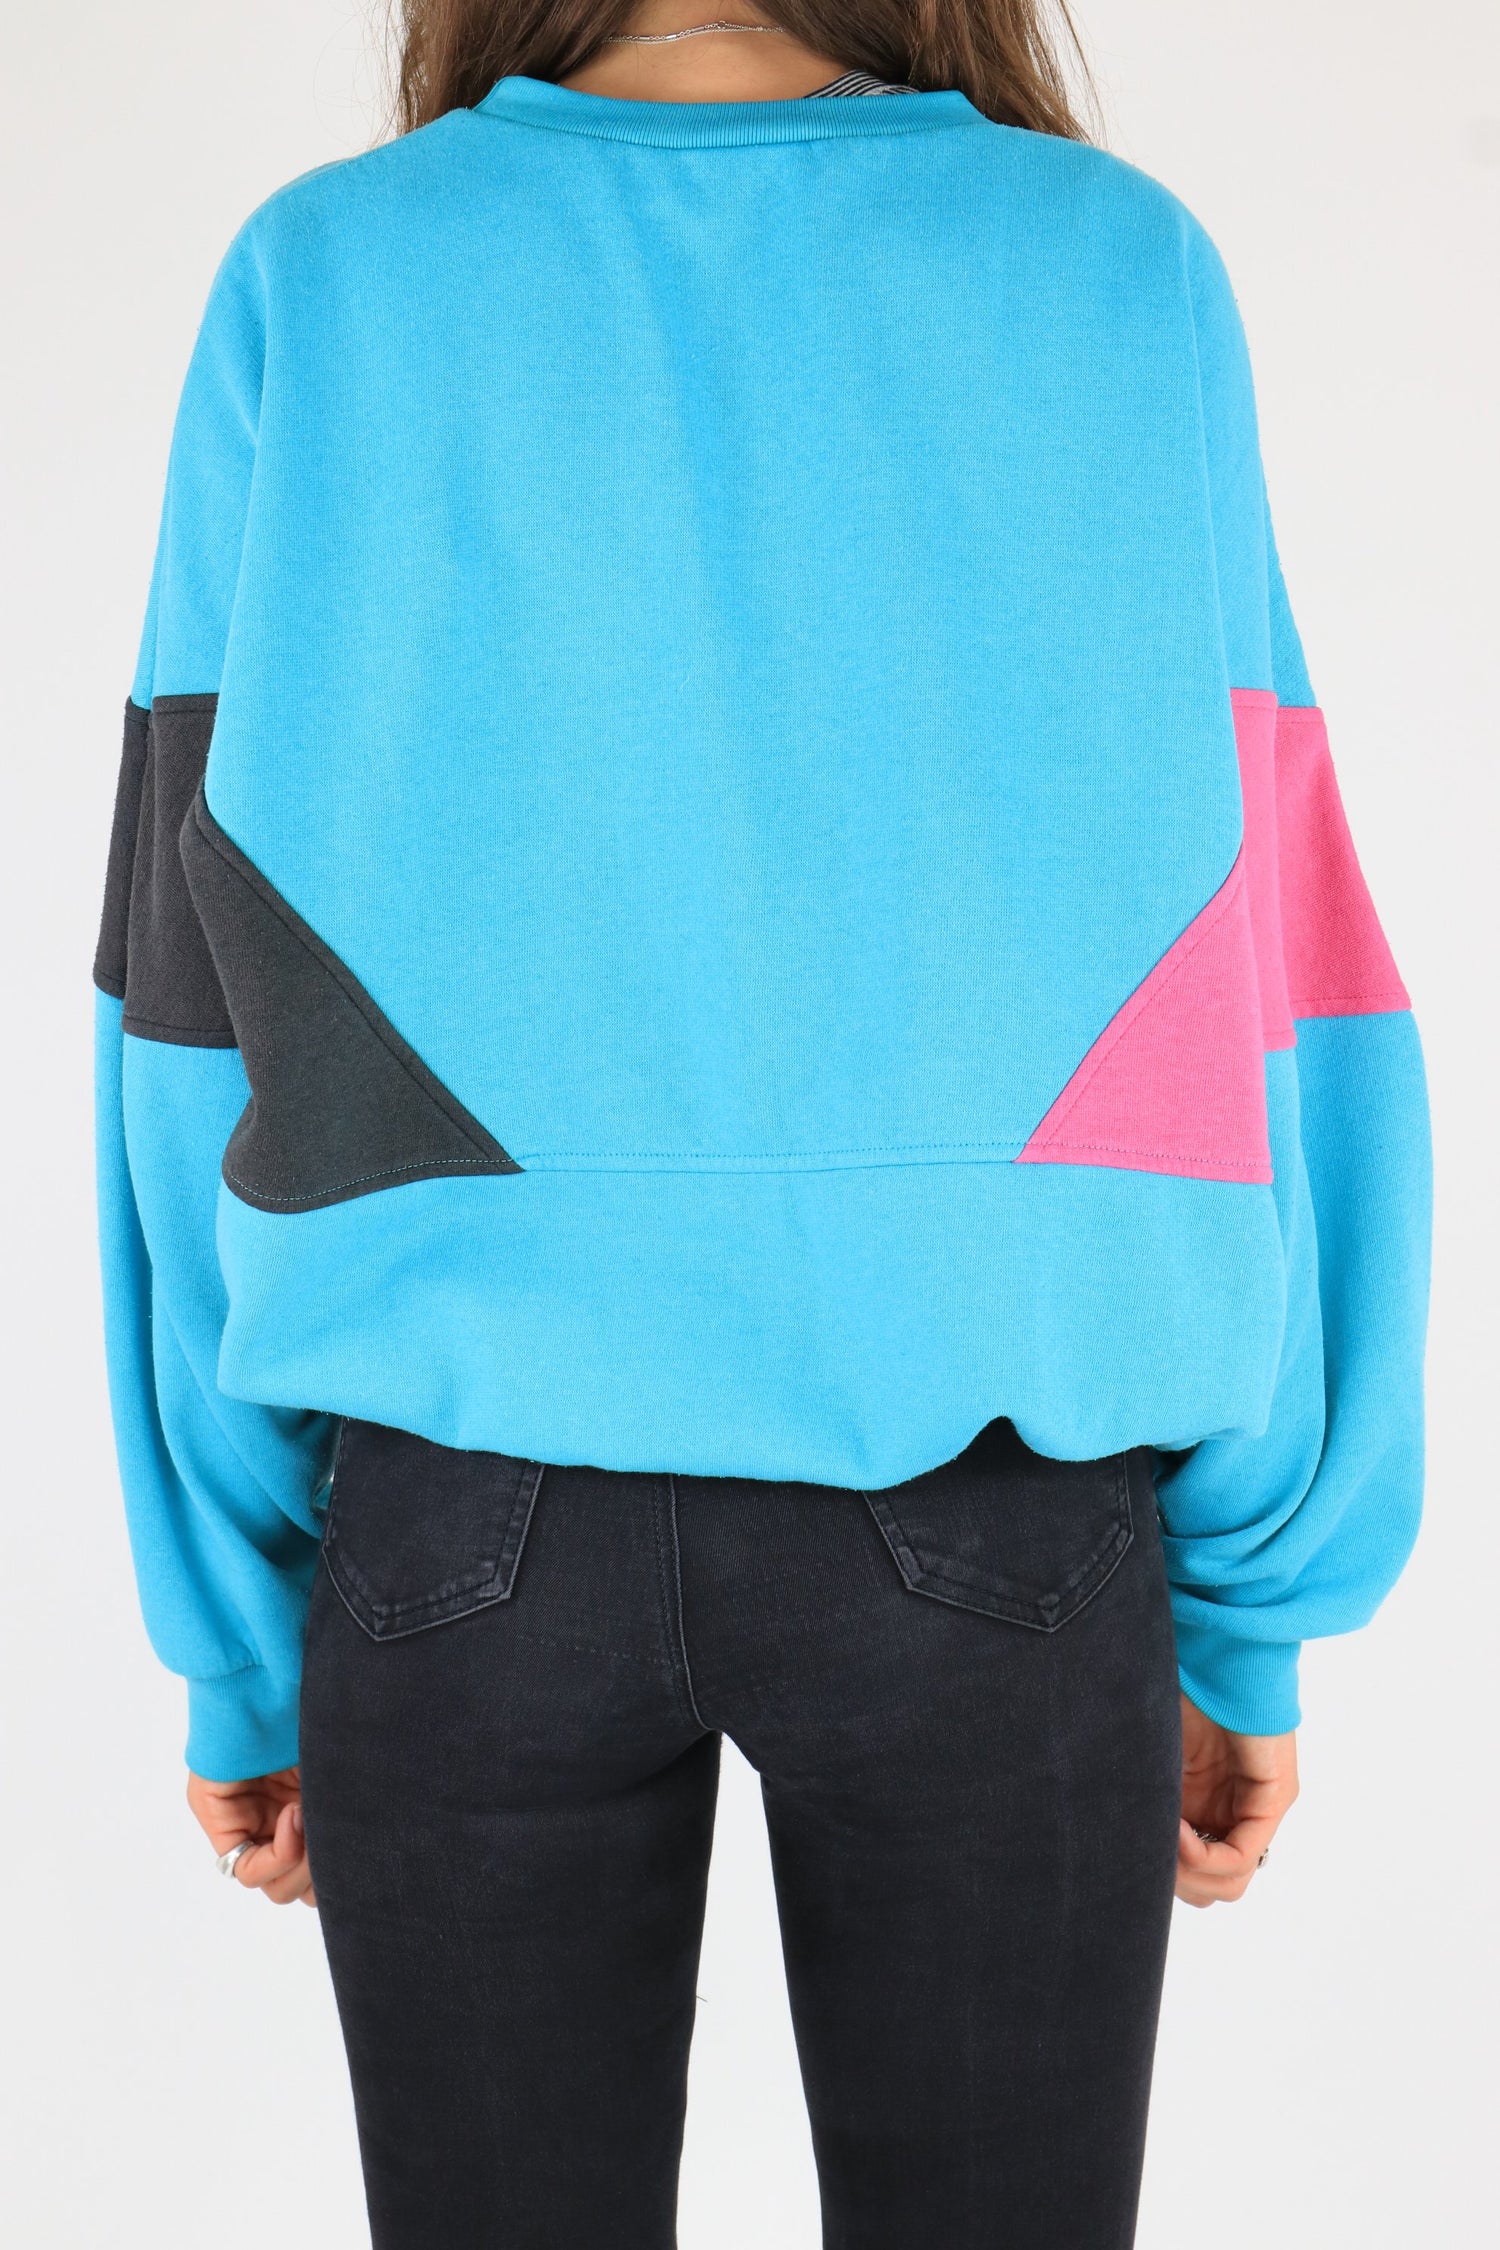 Adidas Sweatshirt Blue/Pink XL